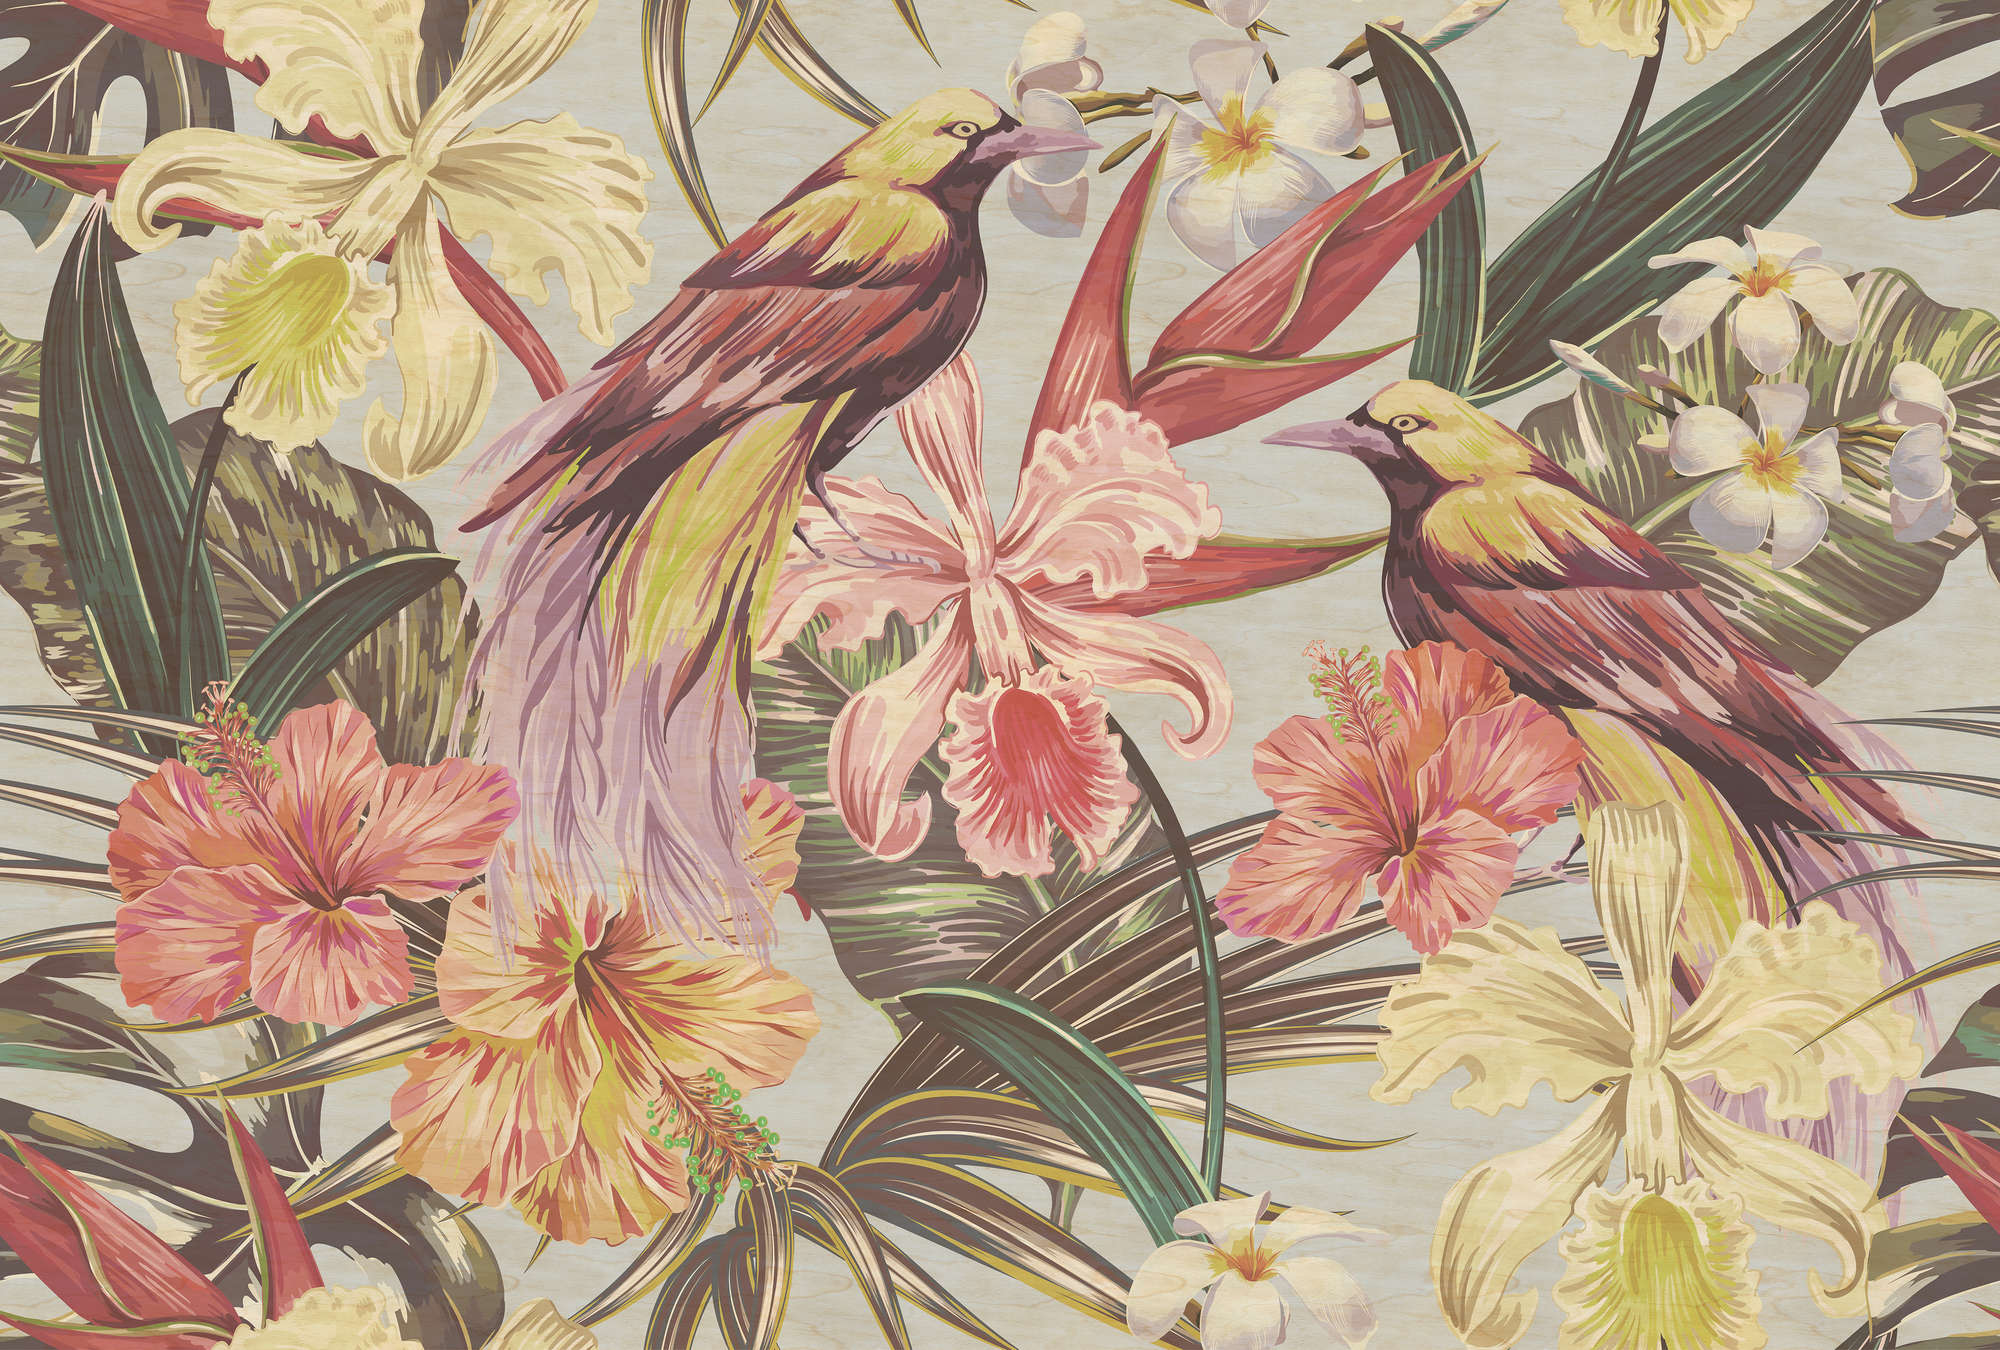             Exotic birds 1 - Exotic birds and flowers wallpaper in plywood structure - Beige, Pink | Matt smooth fleece
        